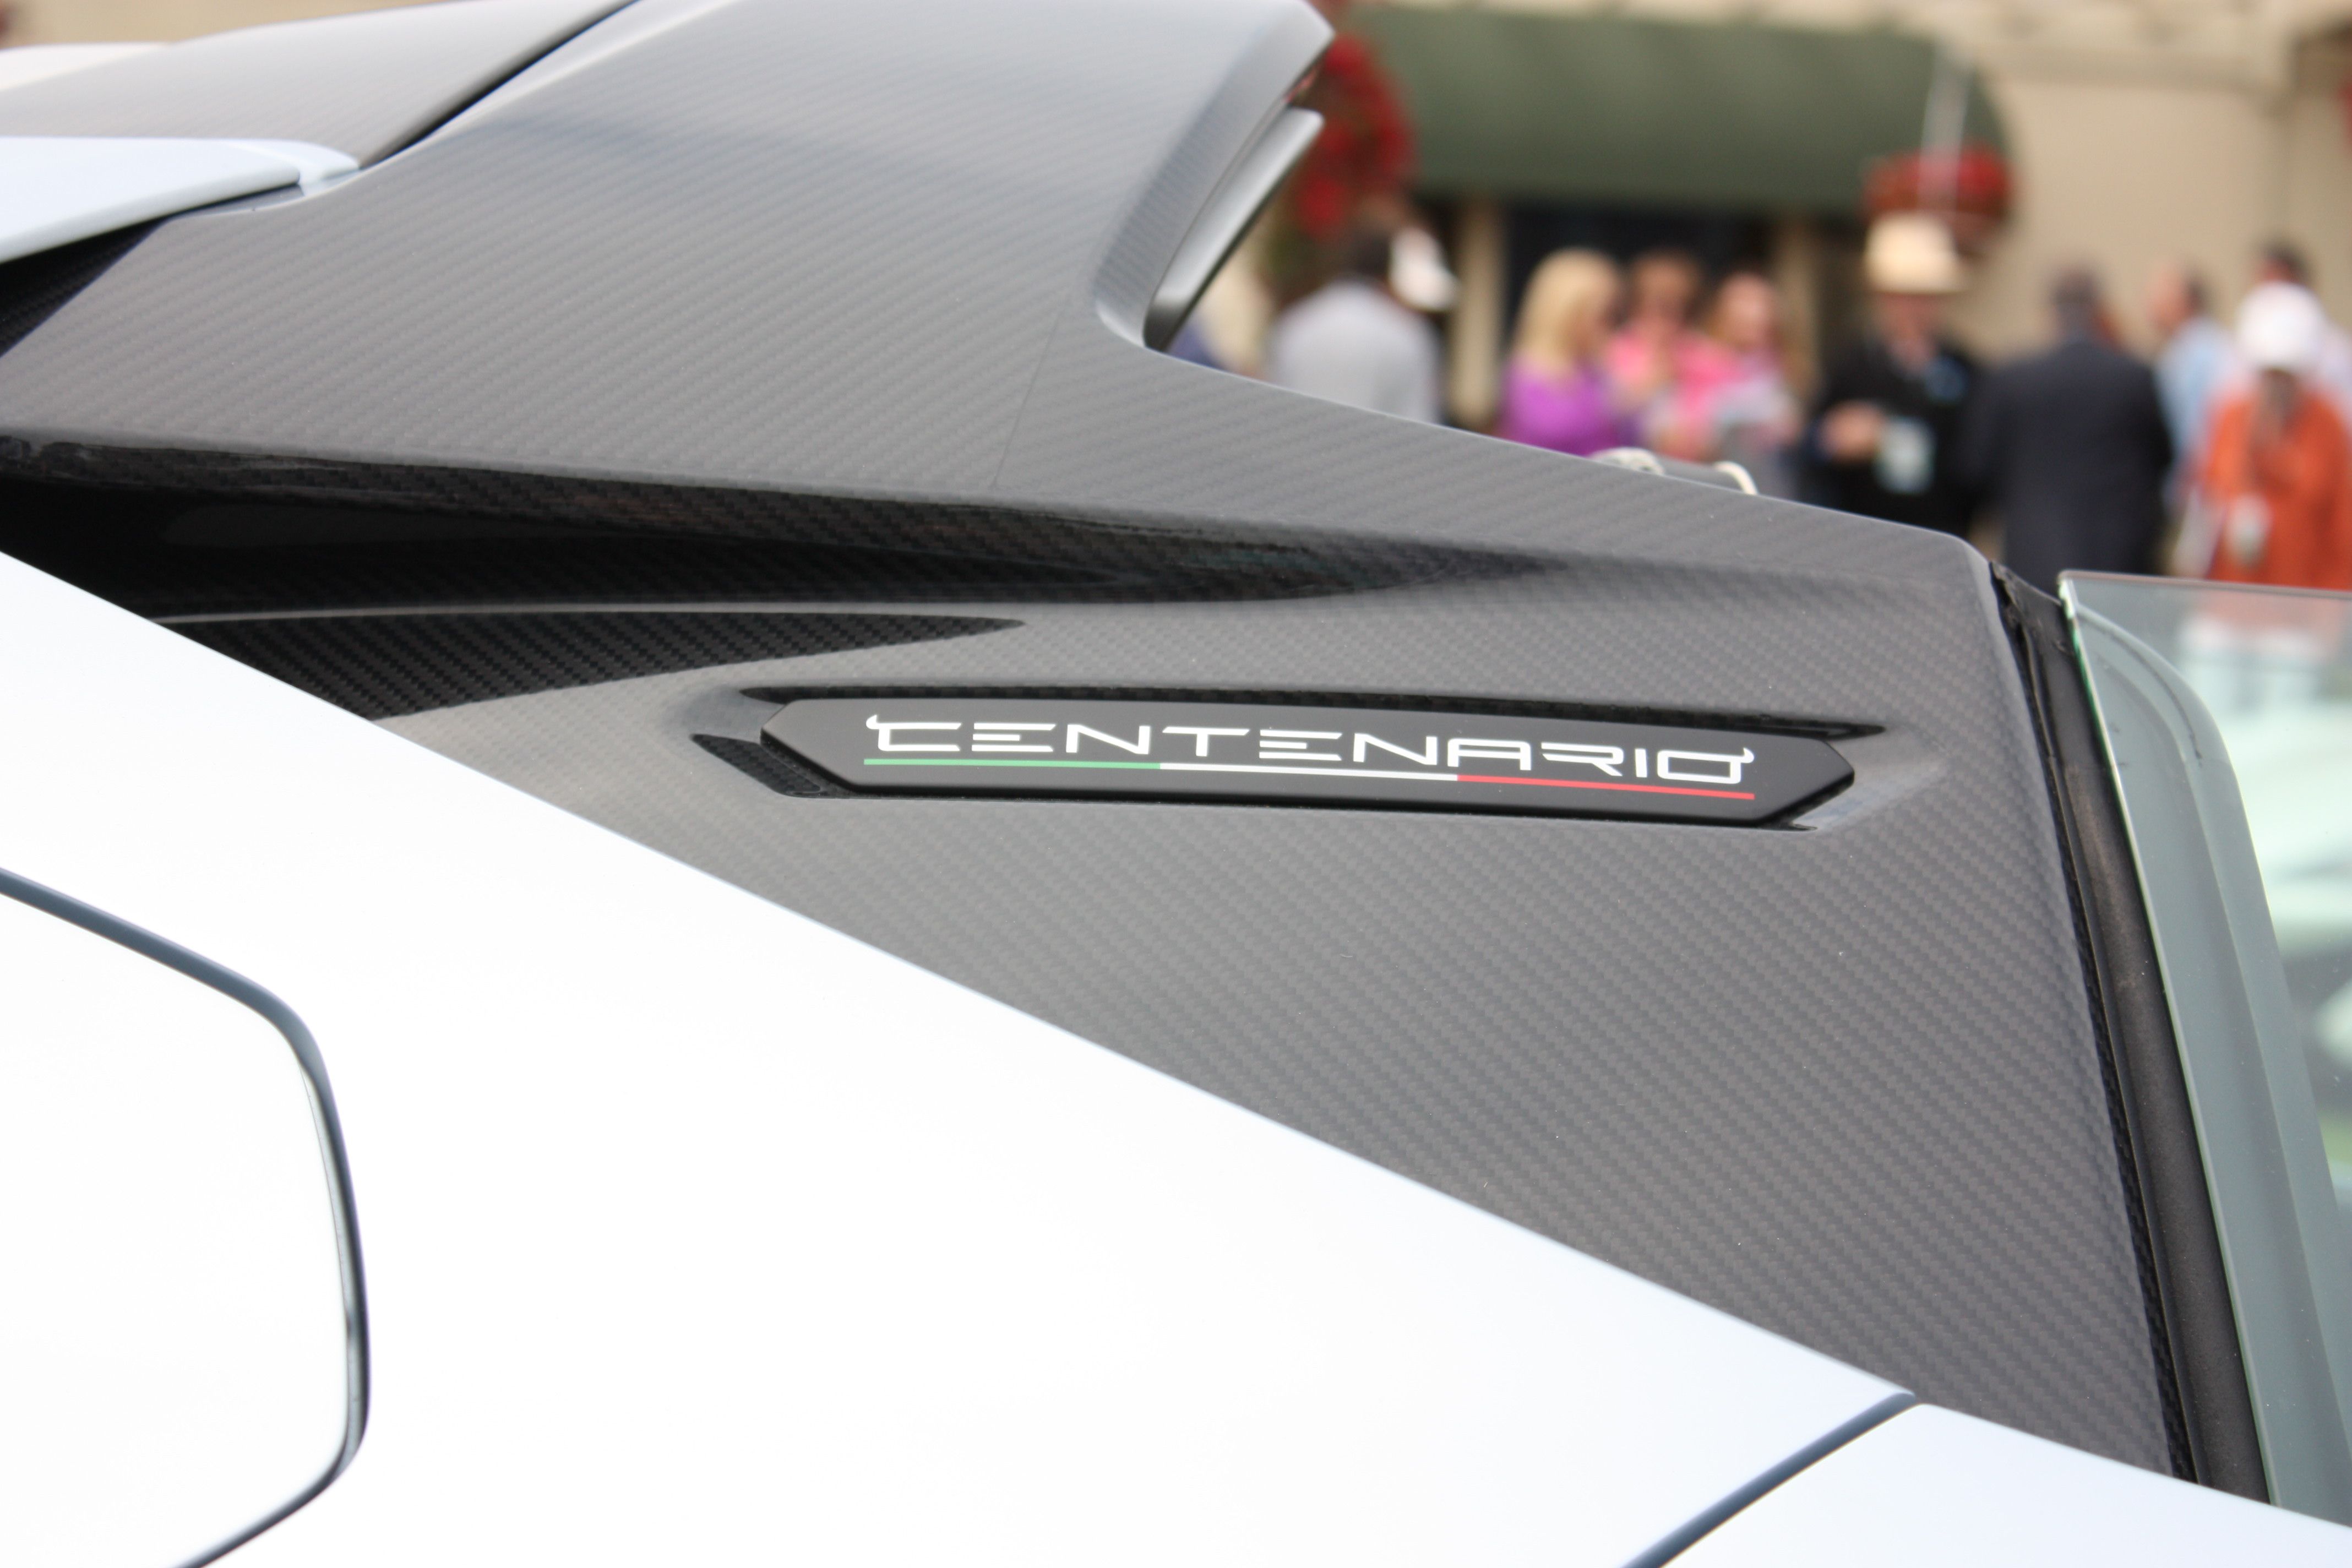 2017 Lamborghini Centenario Roadster